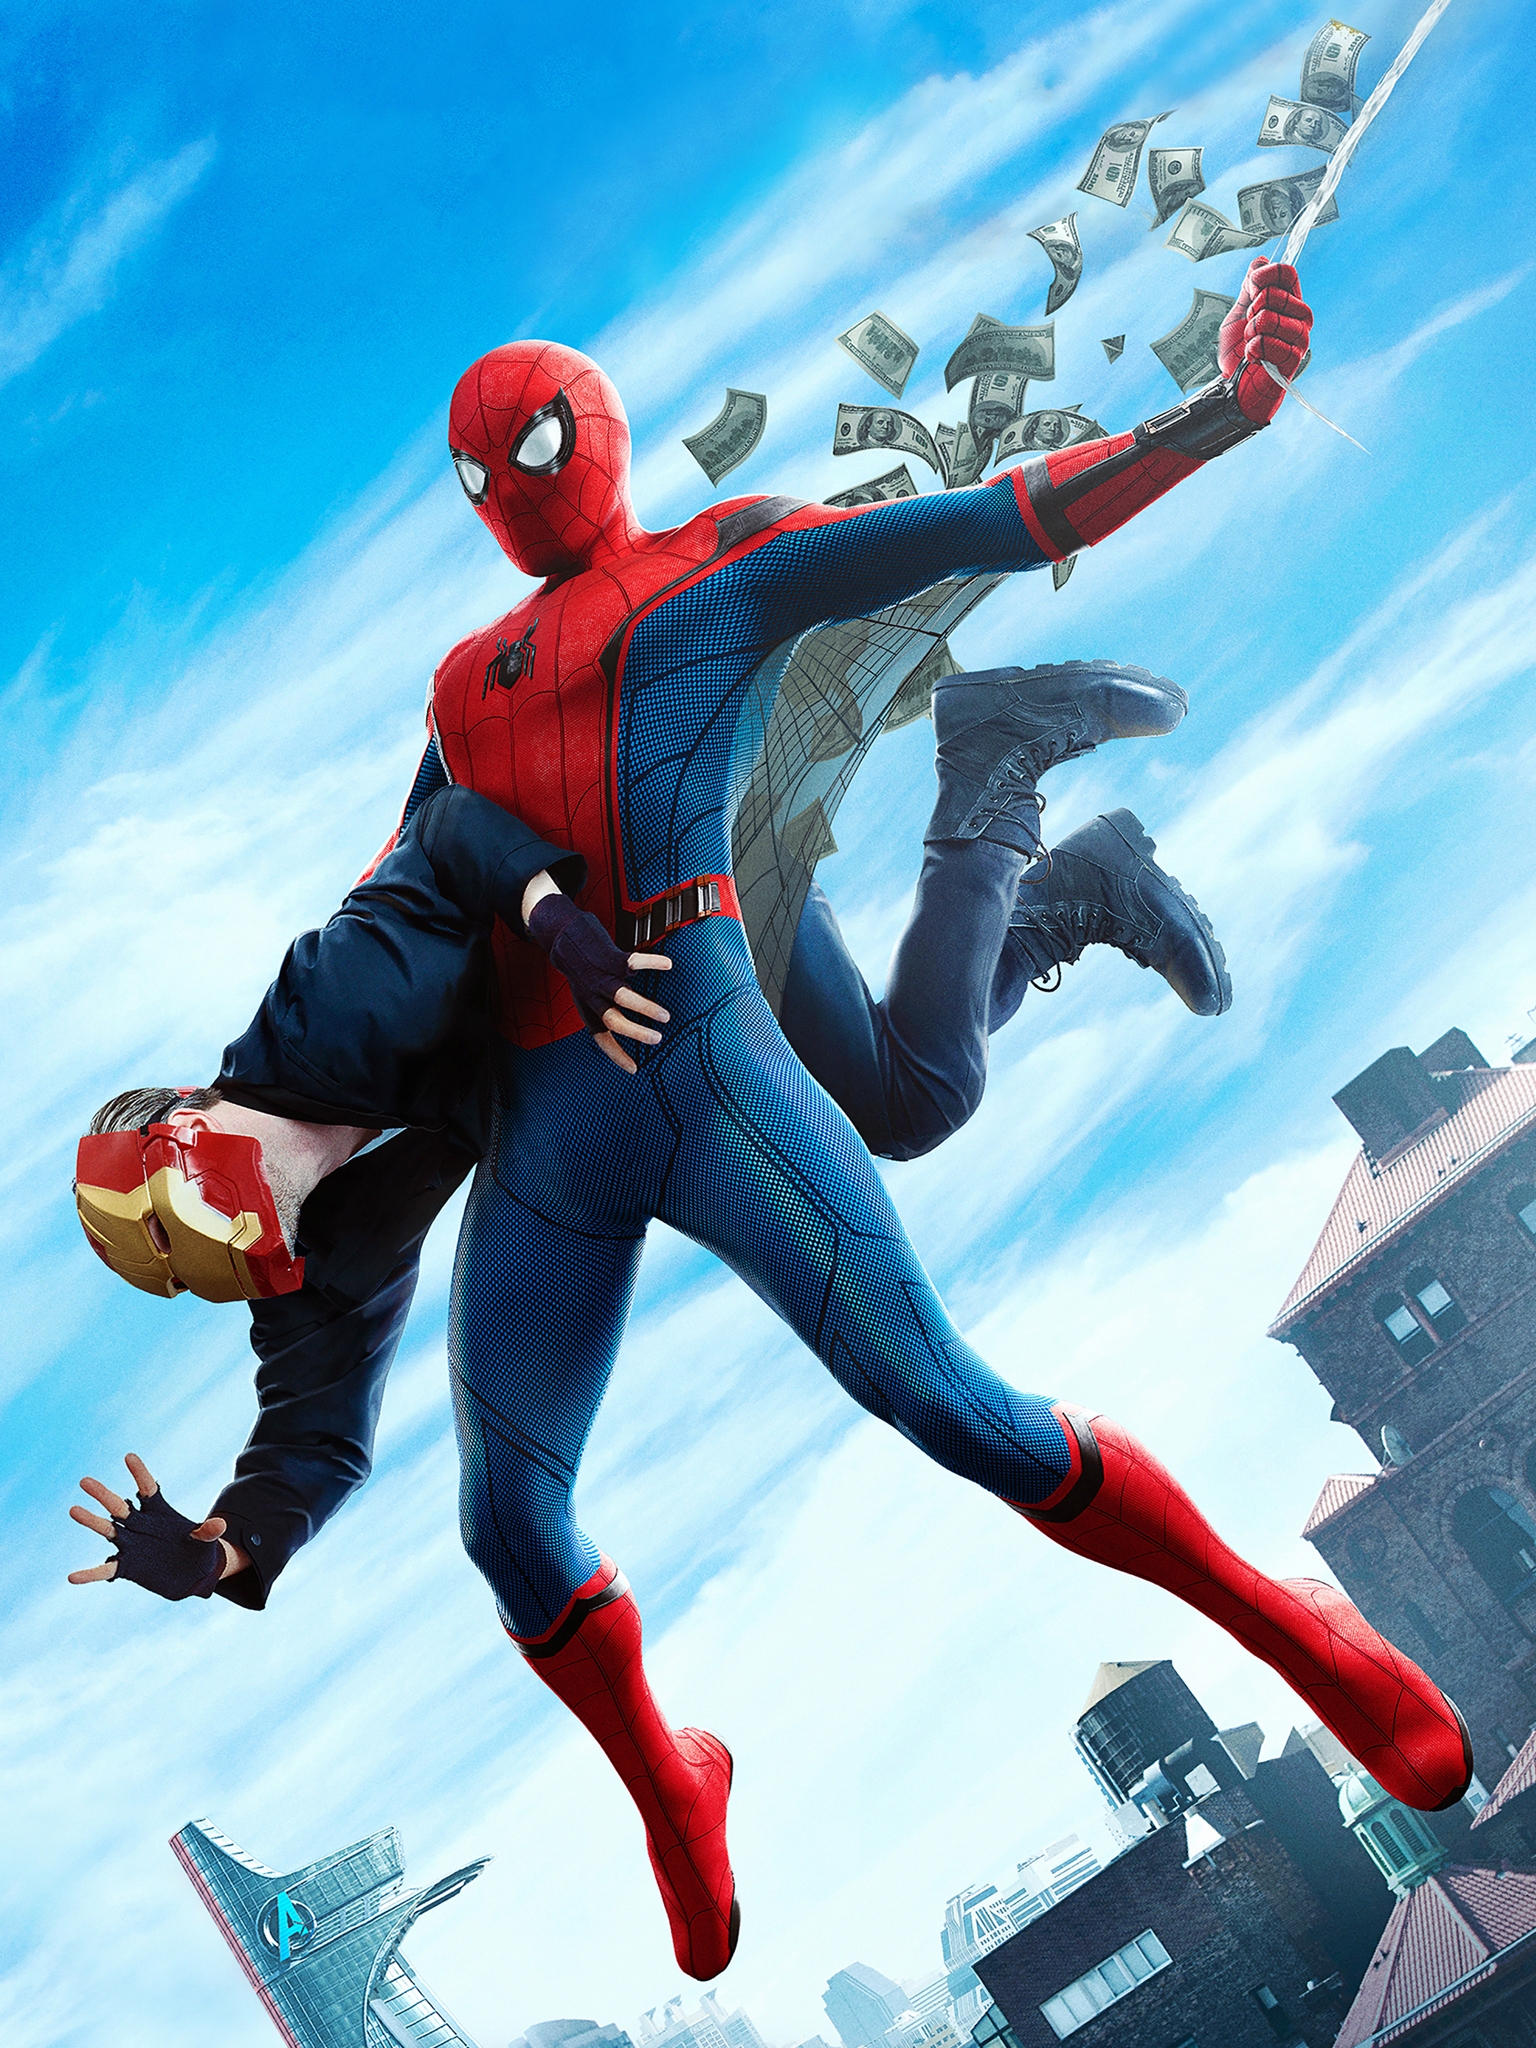 General 1536x2048 Spider-Man: Homecoming Peter Parker movies superhero Spider-Man portrait display humor